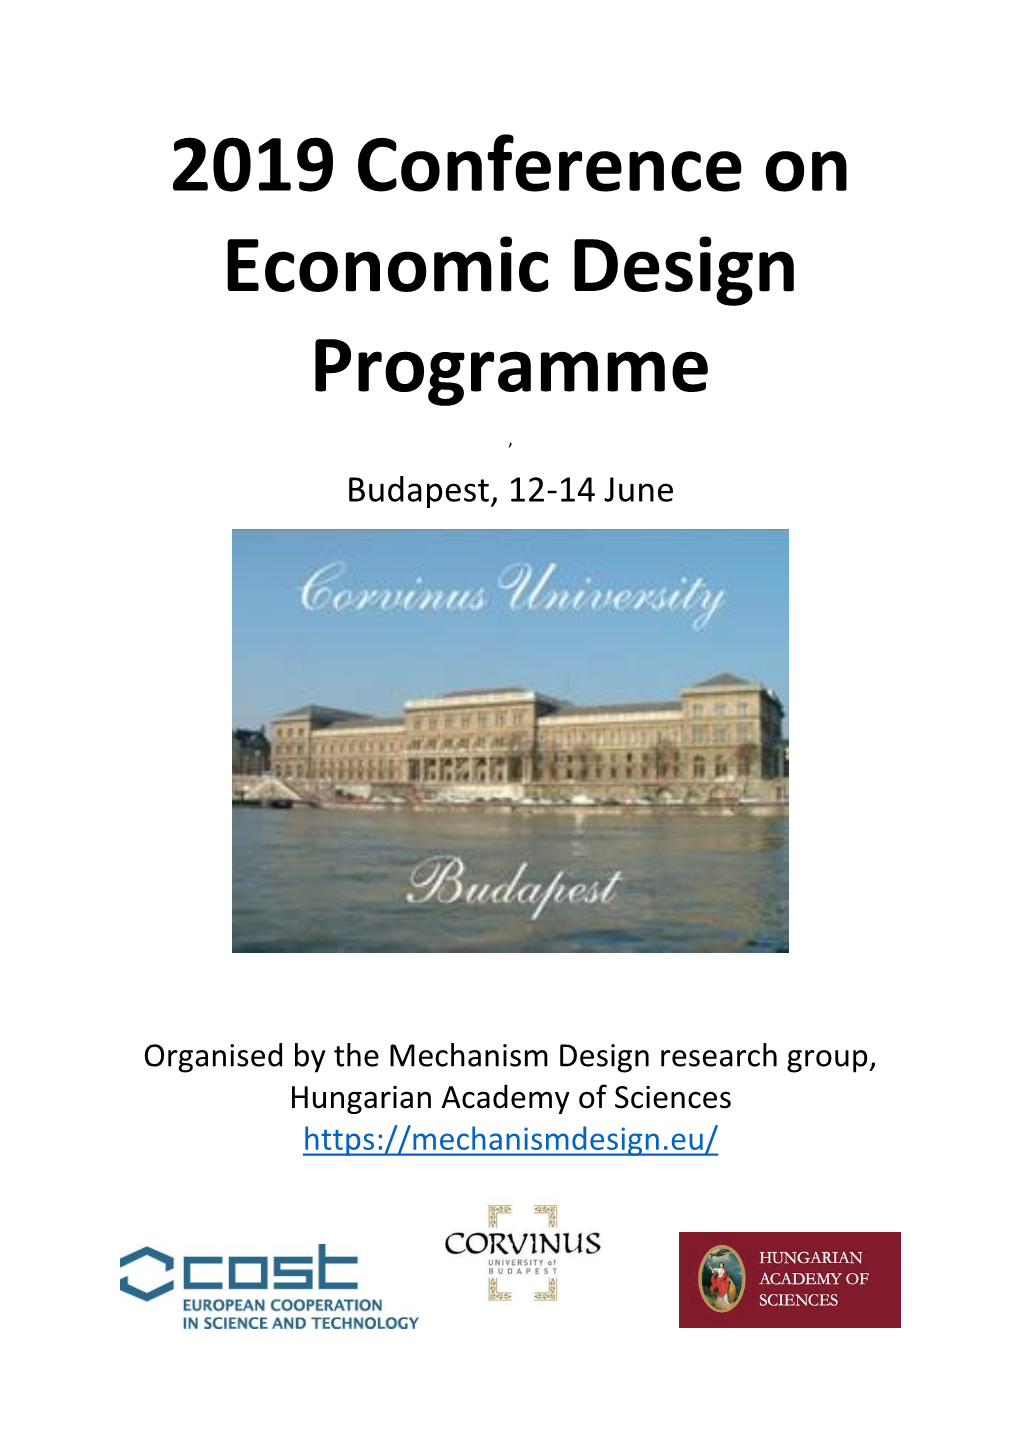 2019 Conference on Economic Design Programme